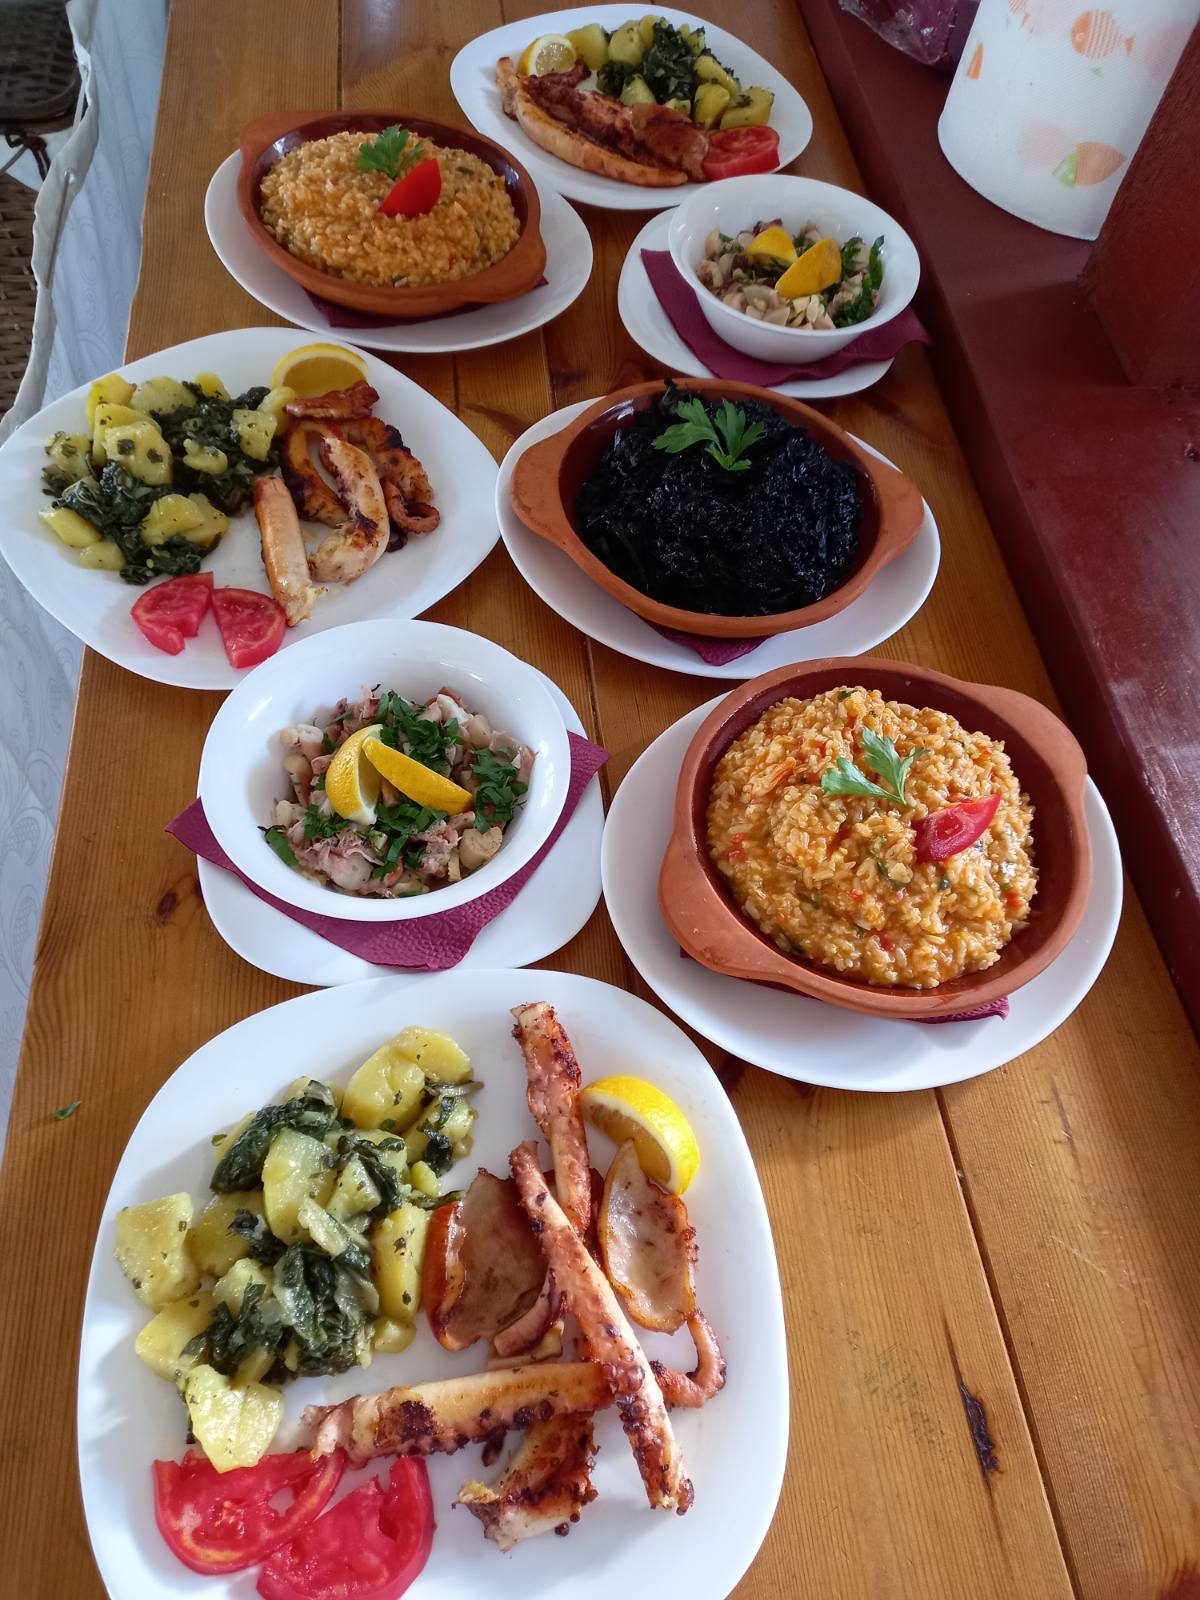 Restoran Konoba Ribar kod Bora enjoy ada bojana